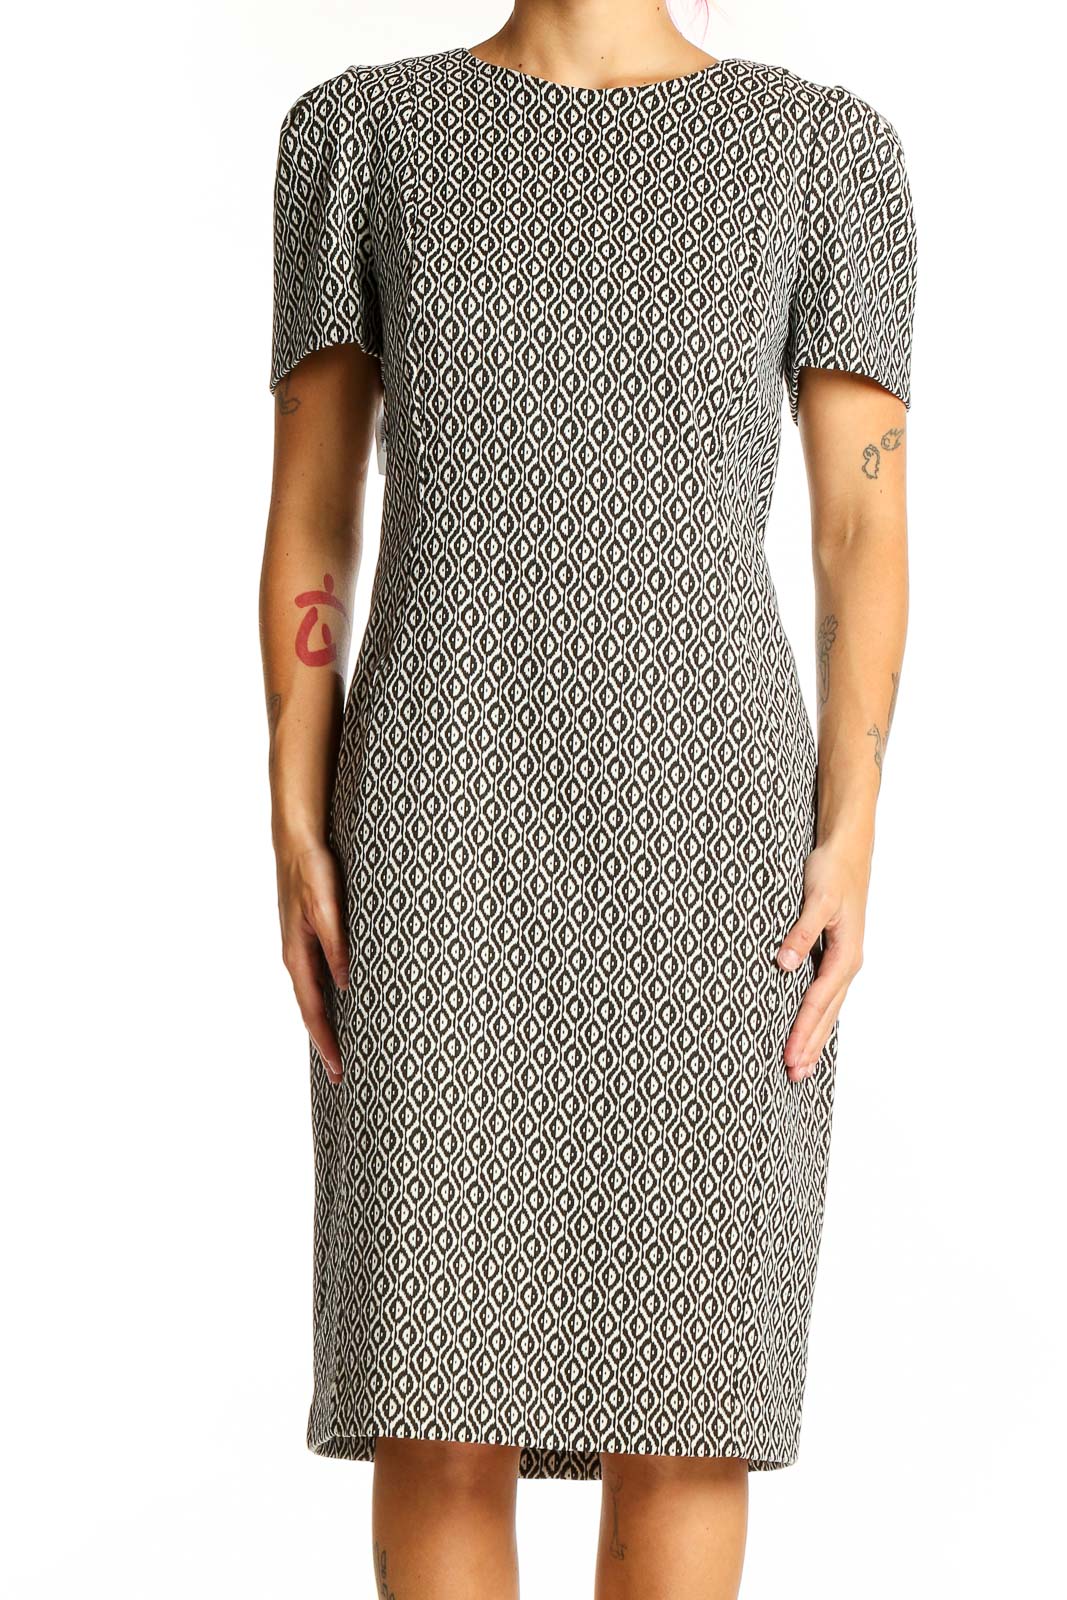 Beige Grey Classic Texture Dress Front